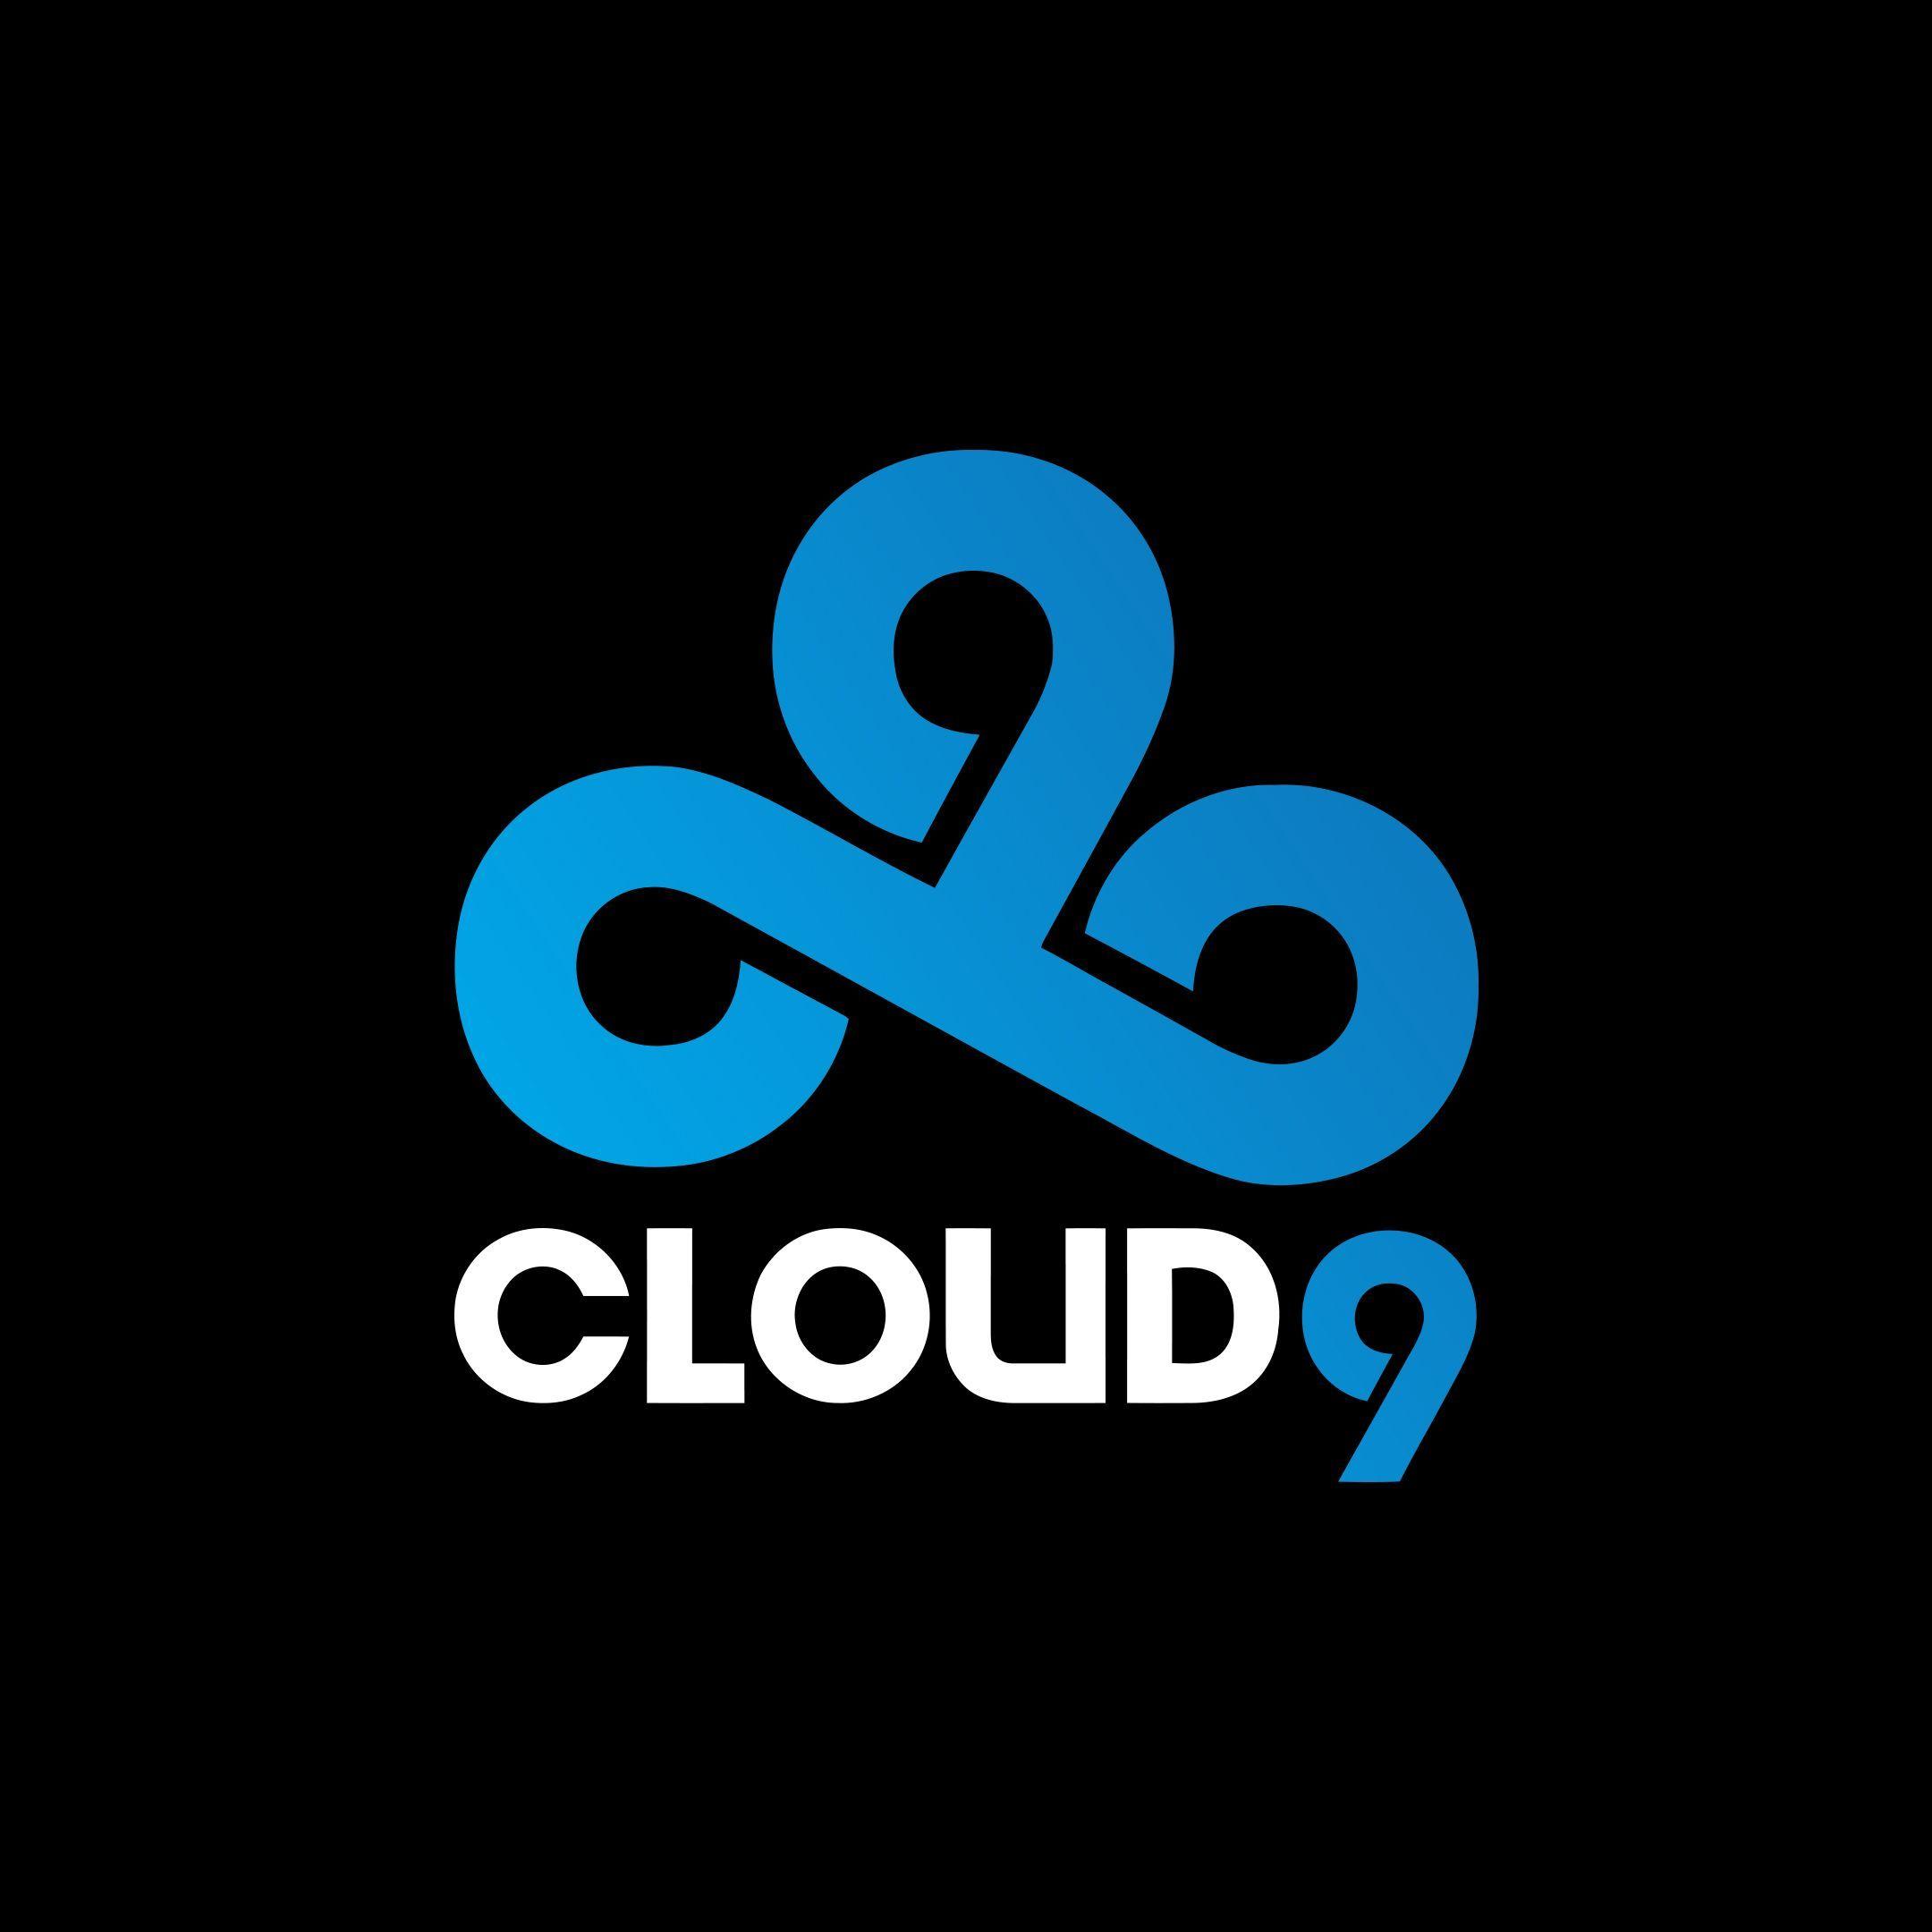 Cloud 9 1. Клоуд 9. Логотип cloud9. Наклейка Клауд 9. Ава клоуд 9.